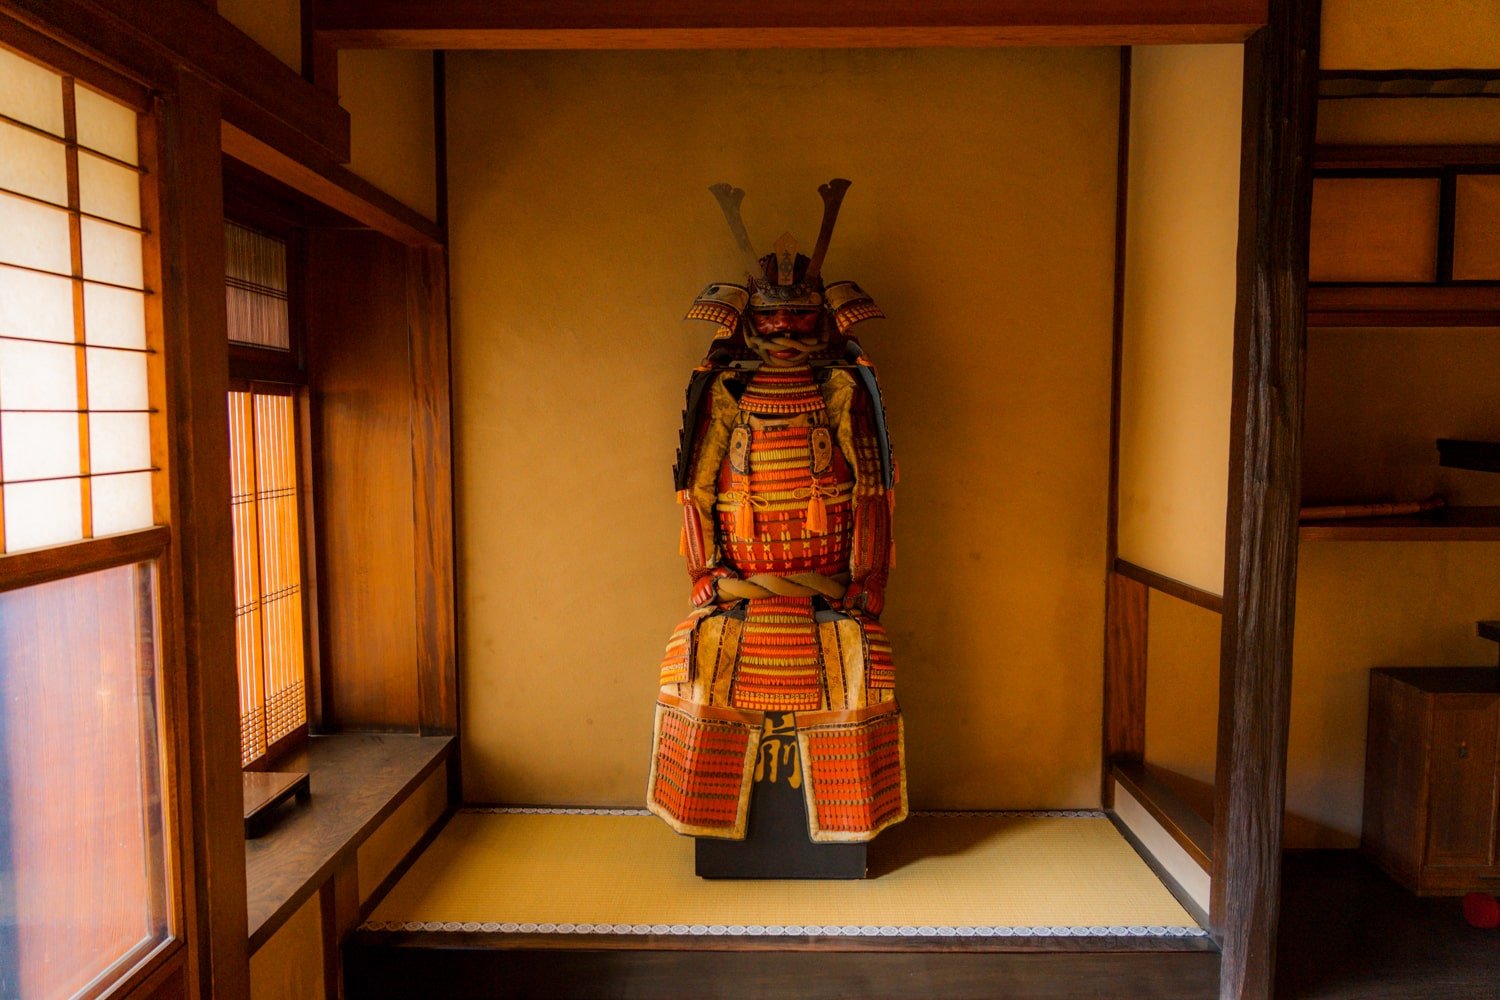 A Japanese samurai's armor on display inside historic samurai officer's home in Kyoto, Japan.